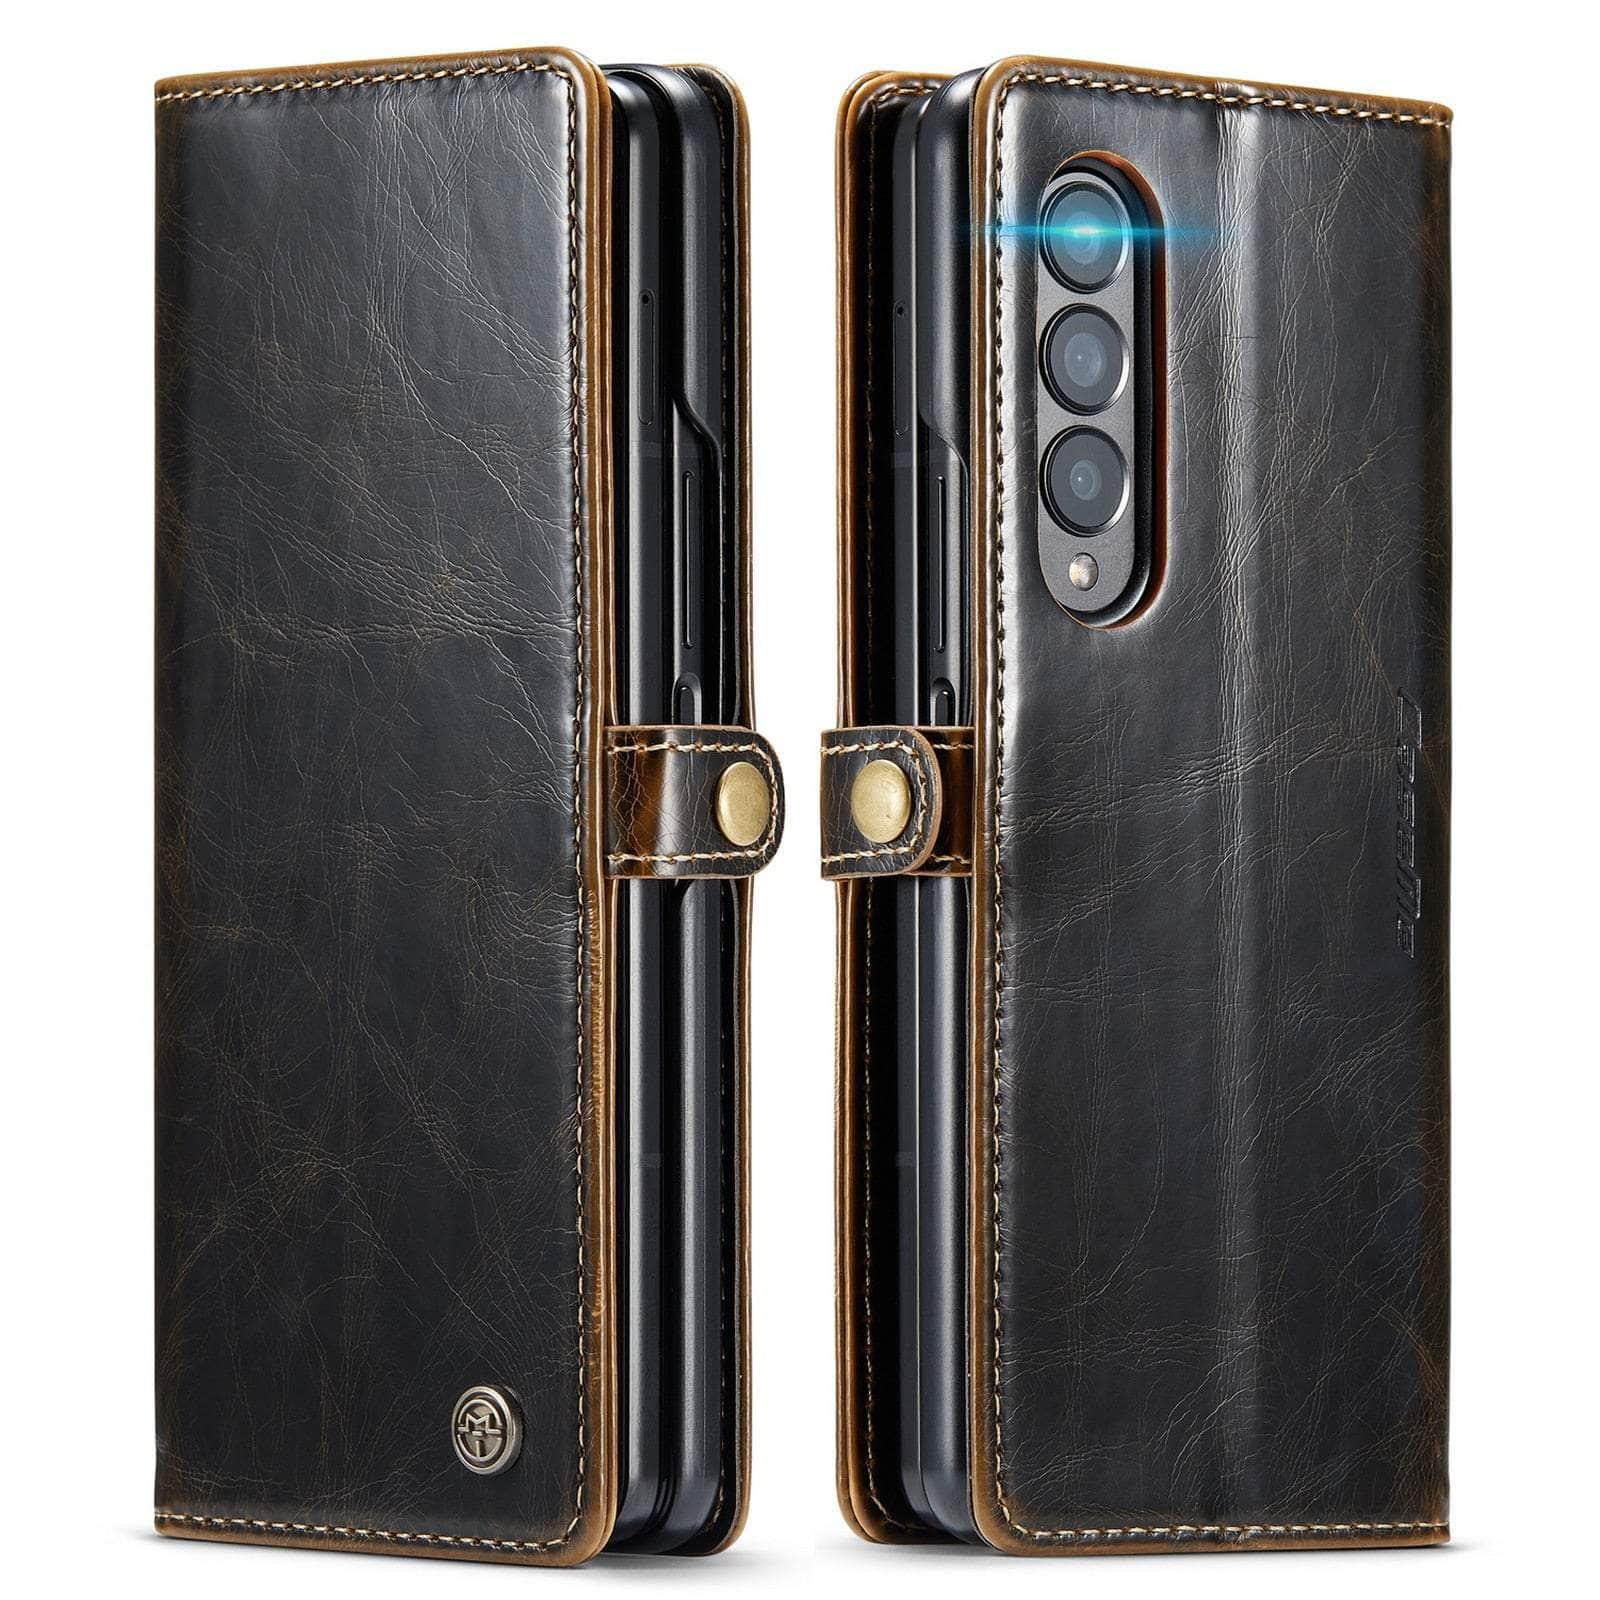 Casebuddy Auburn / for Samsung Z Fold 3 Galaxy Z Fold 3  Full Protection Business Leather Case